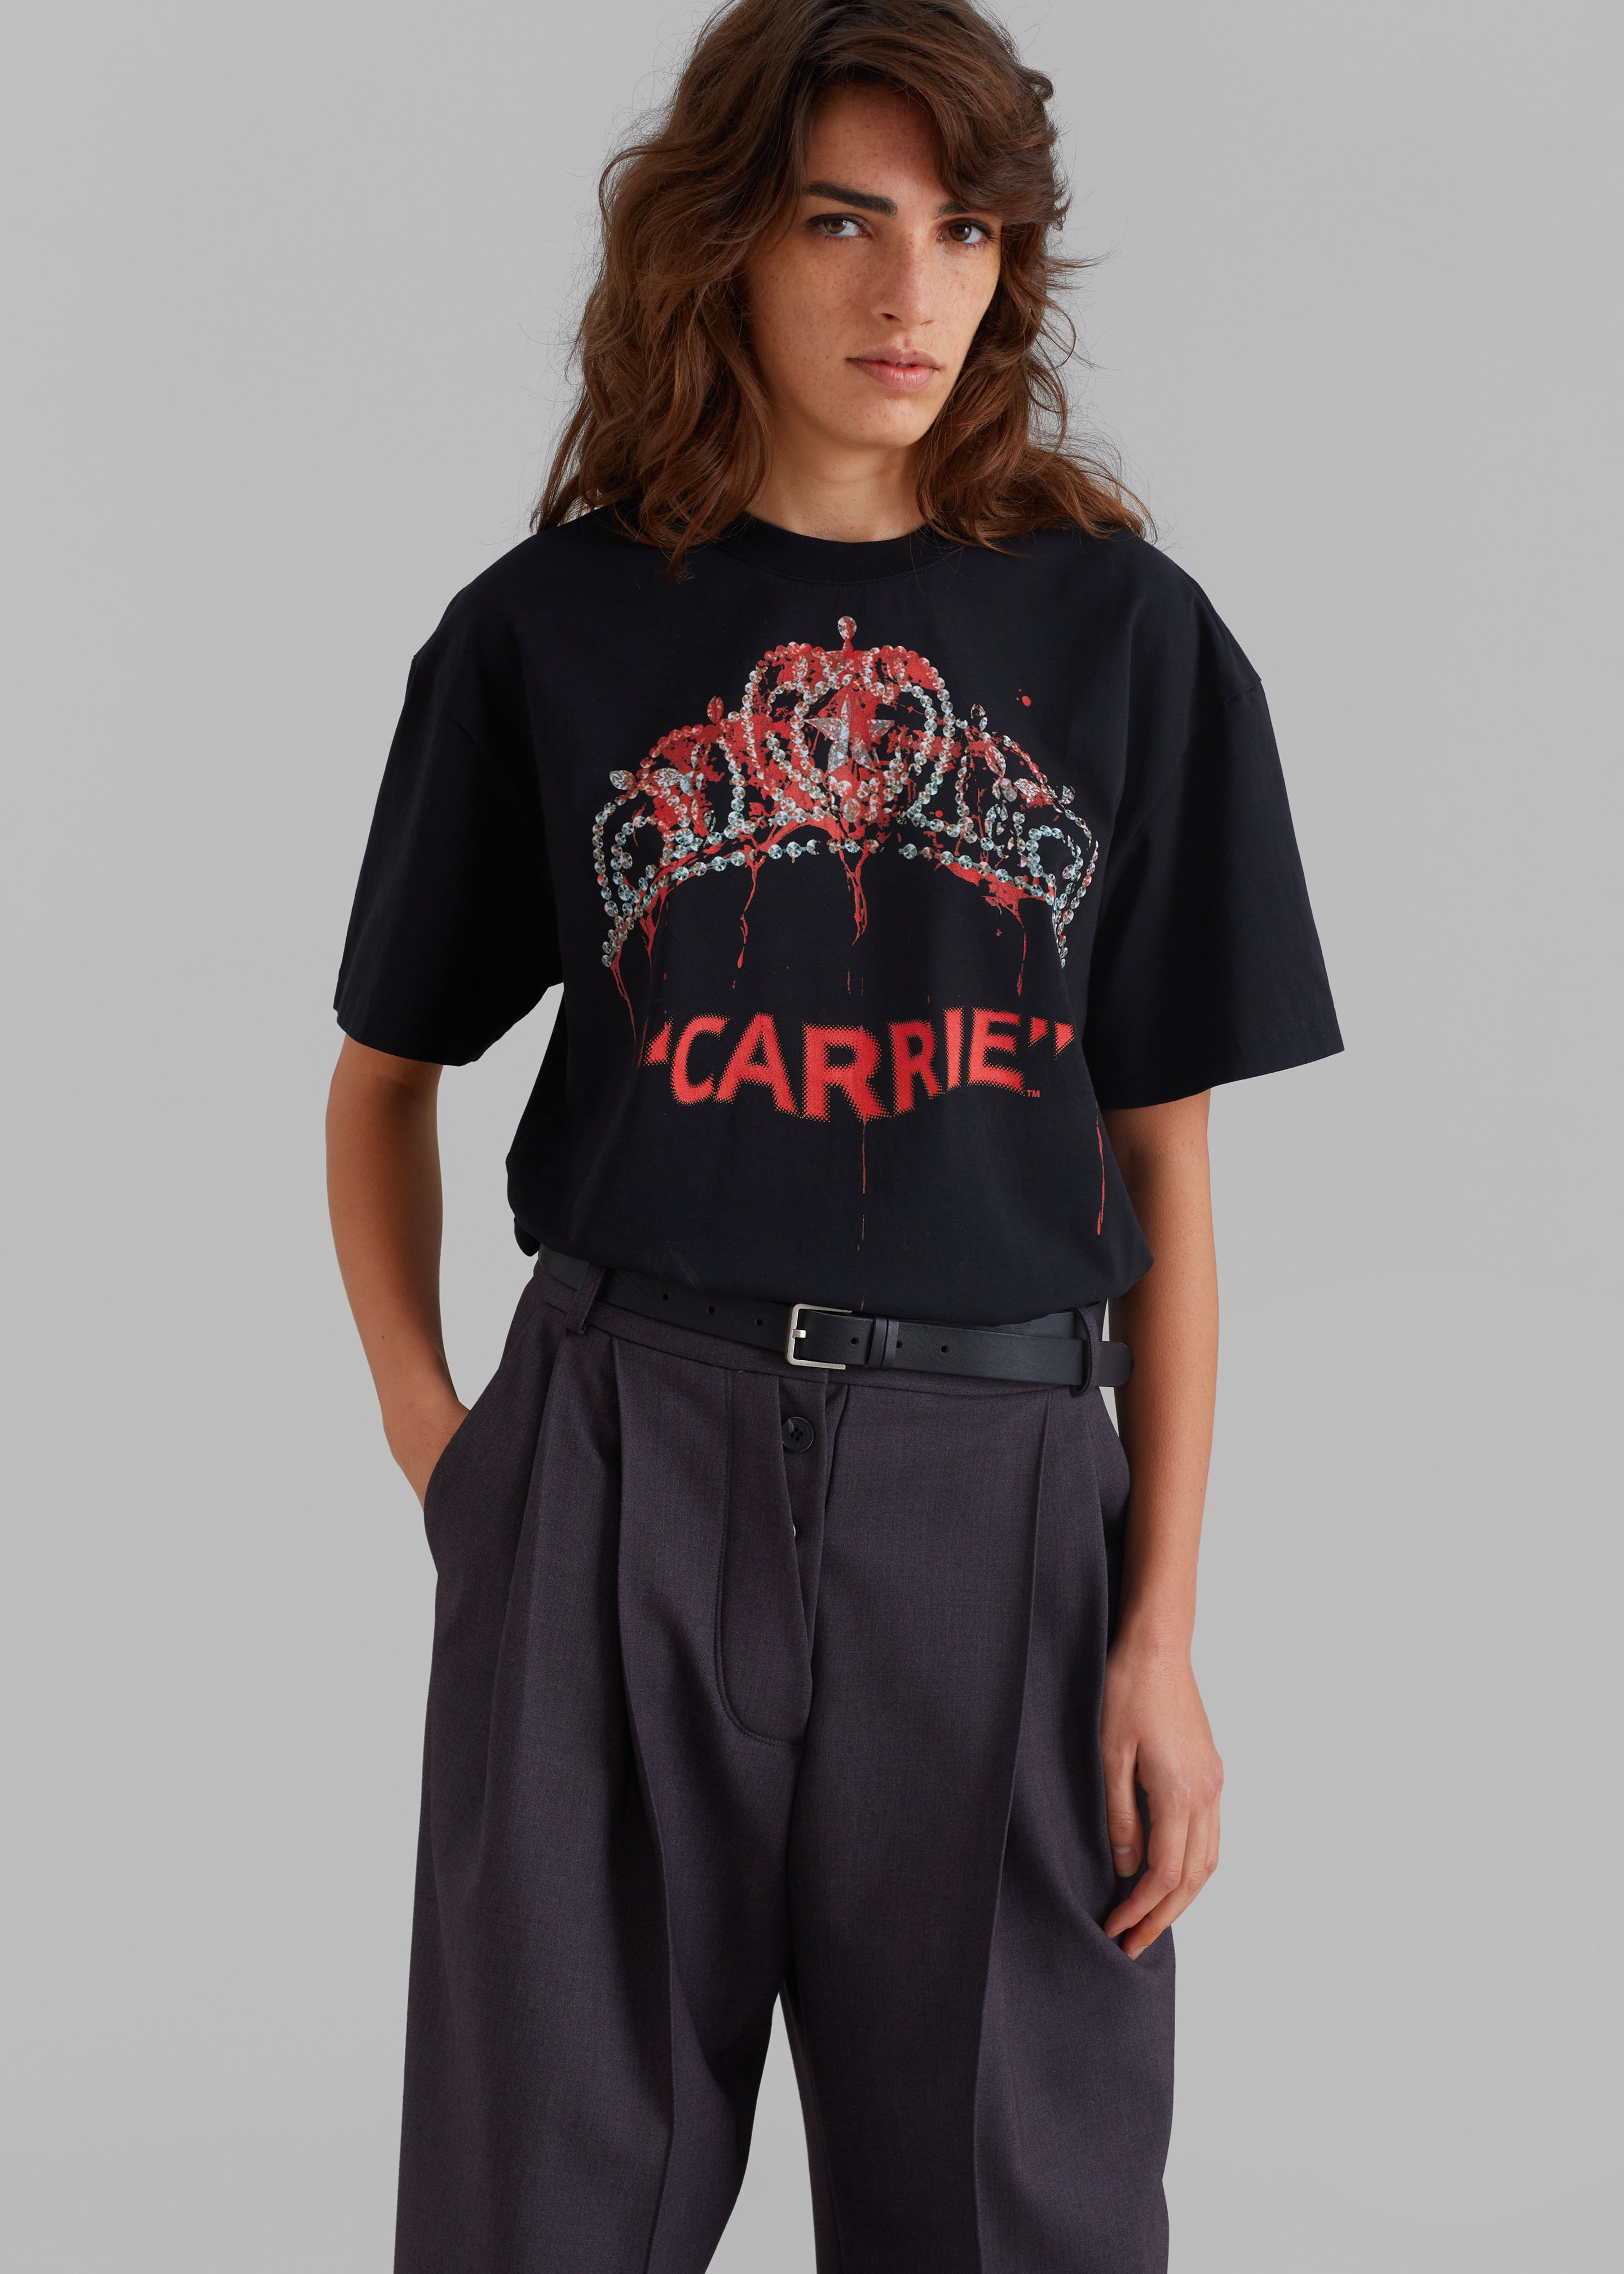 JW Anderson Carrie Tiara T-Shirt - Black - 6